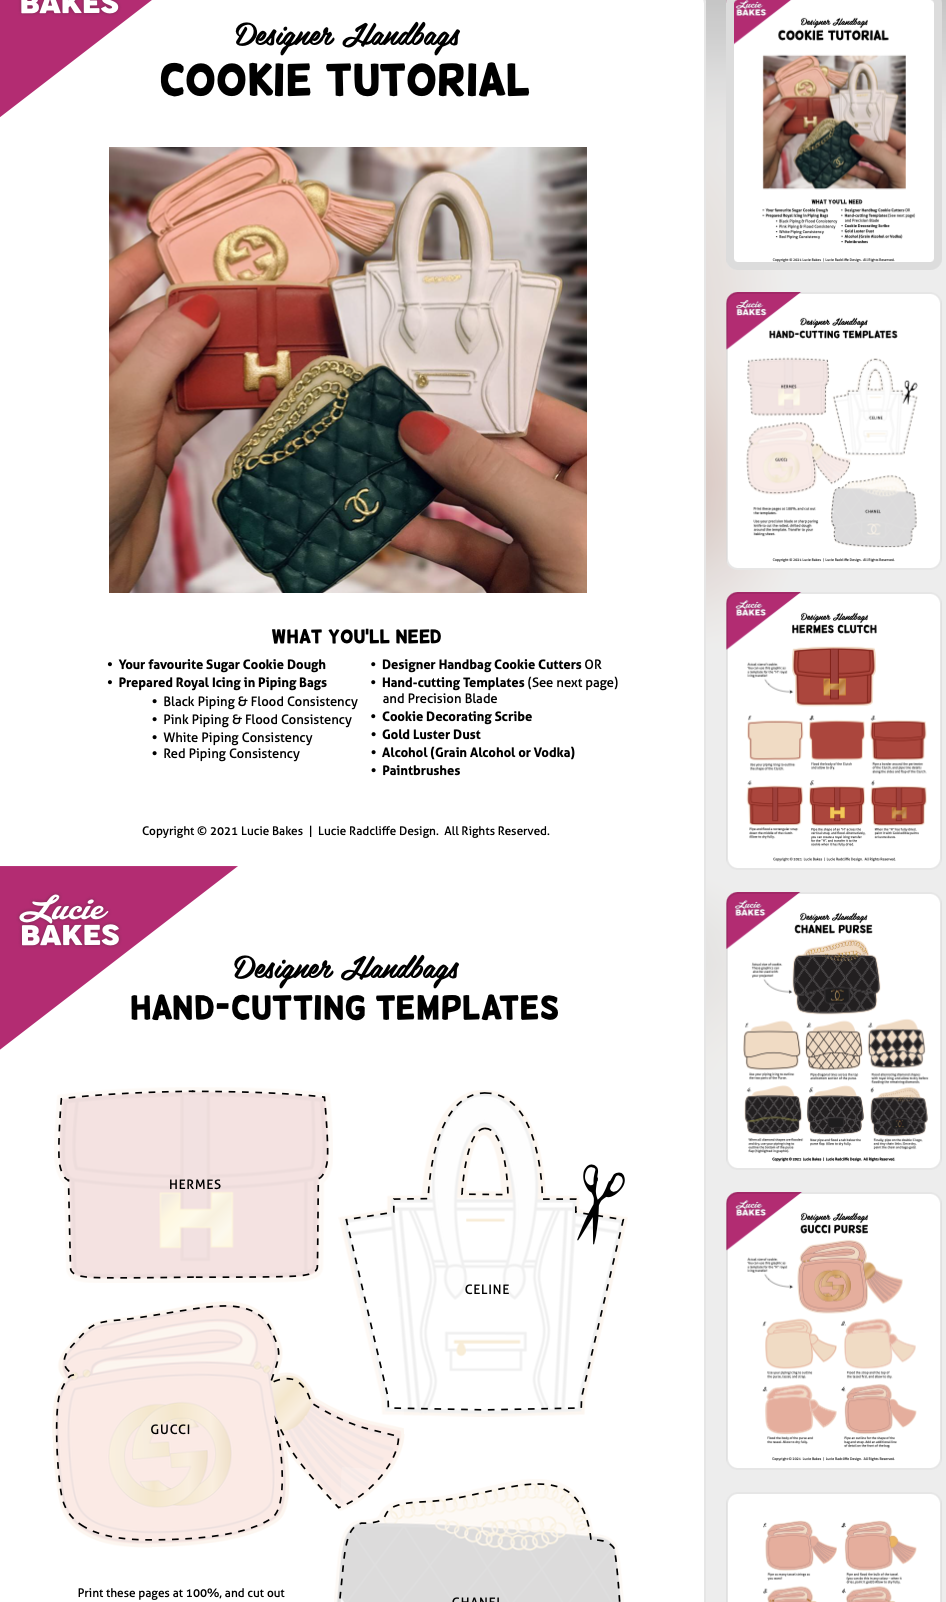 Lakeland is launching a genius handbag cake kit you can carry